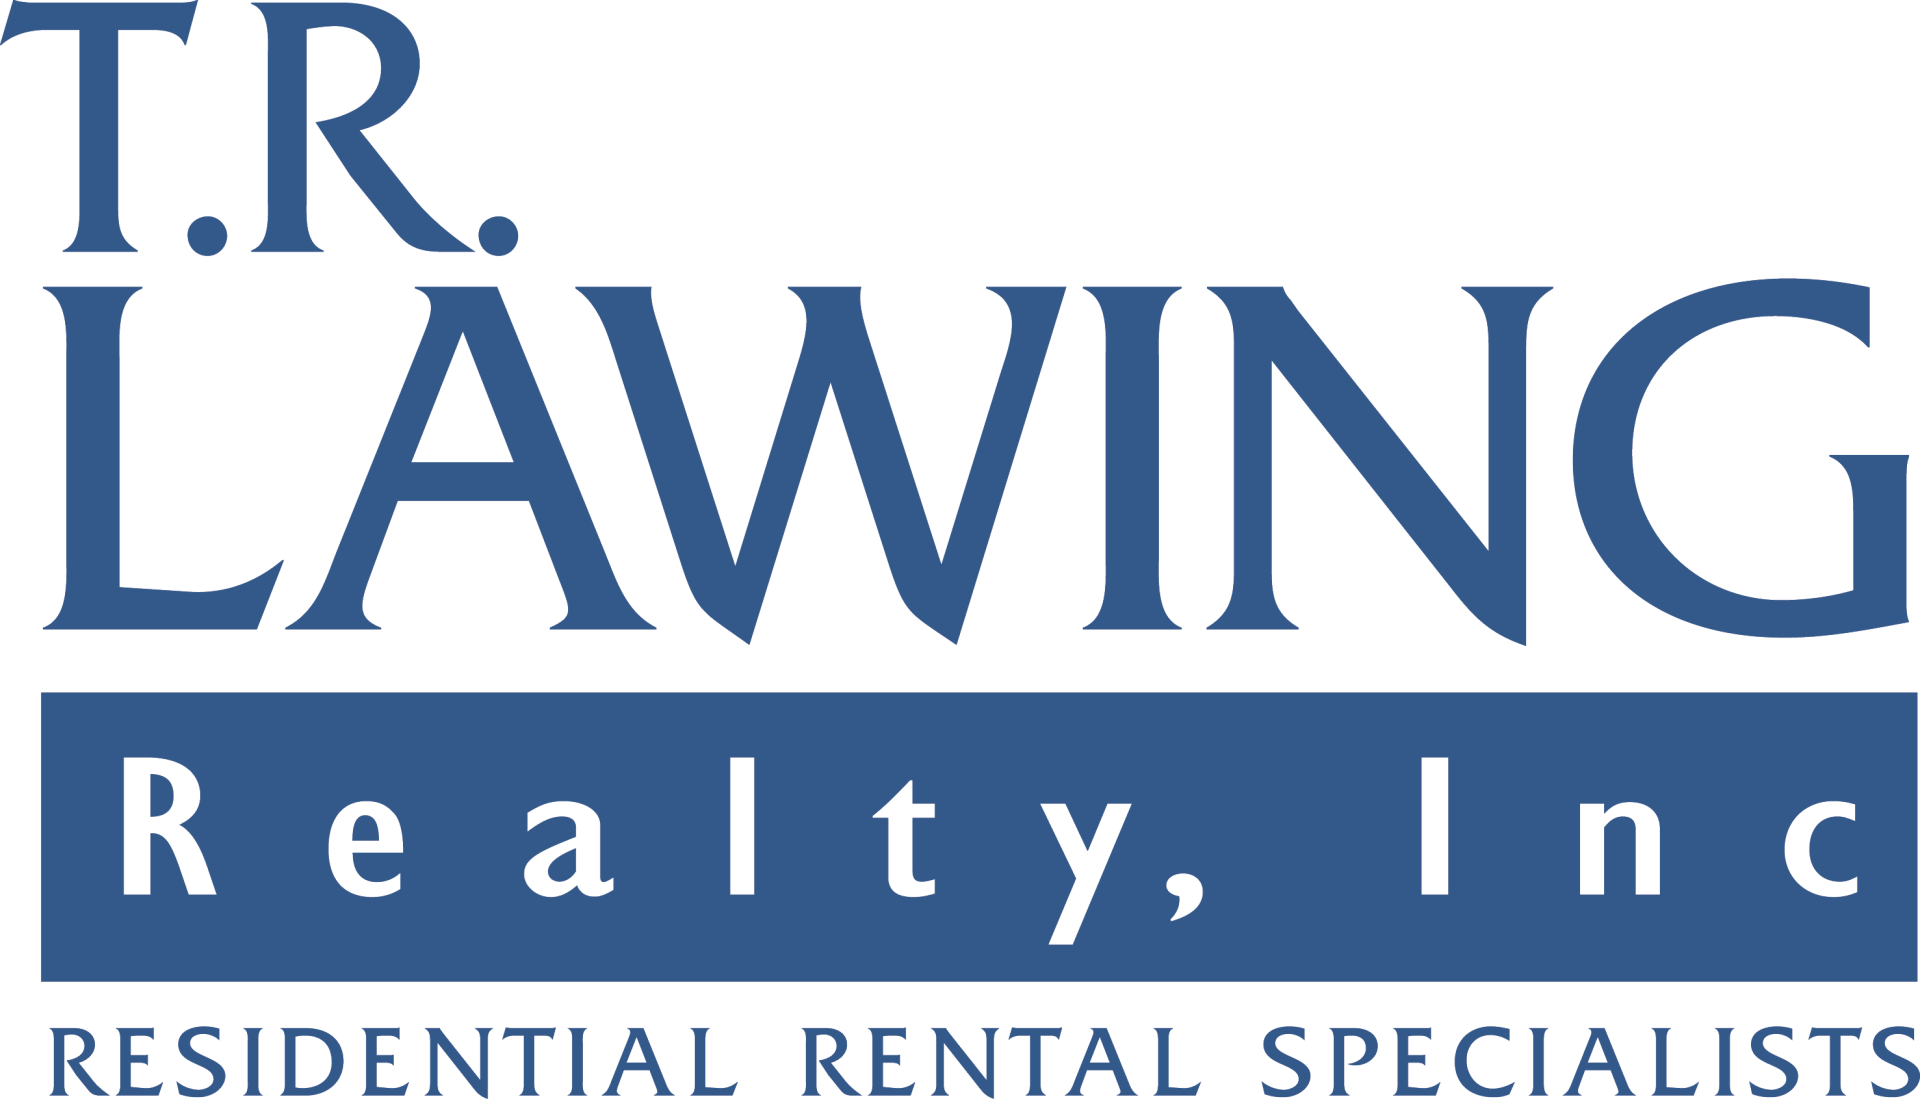 T.R. Lawing Realty Inc logo